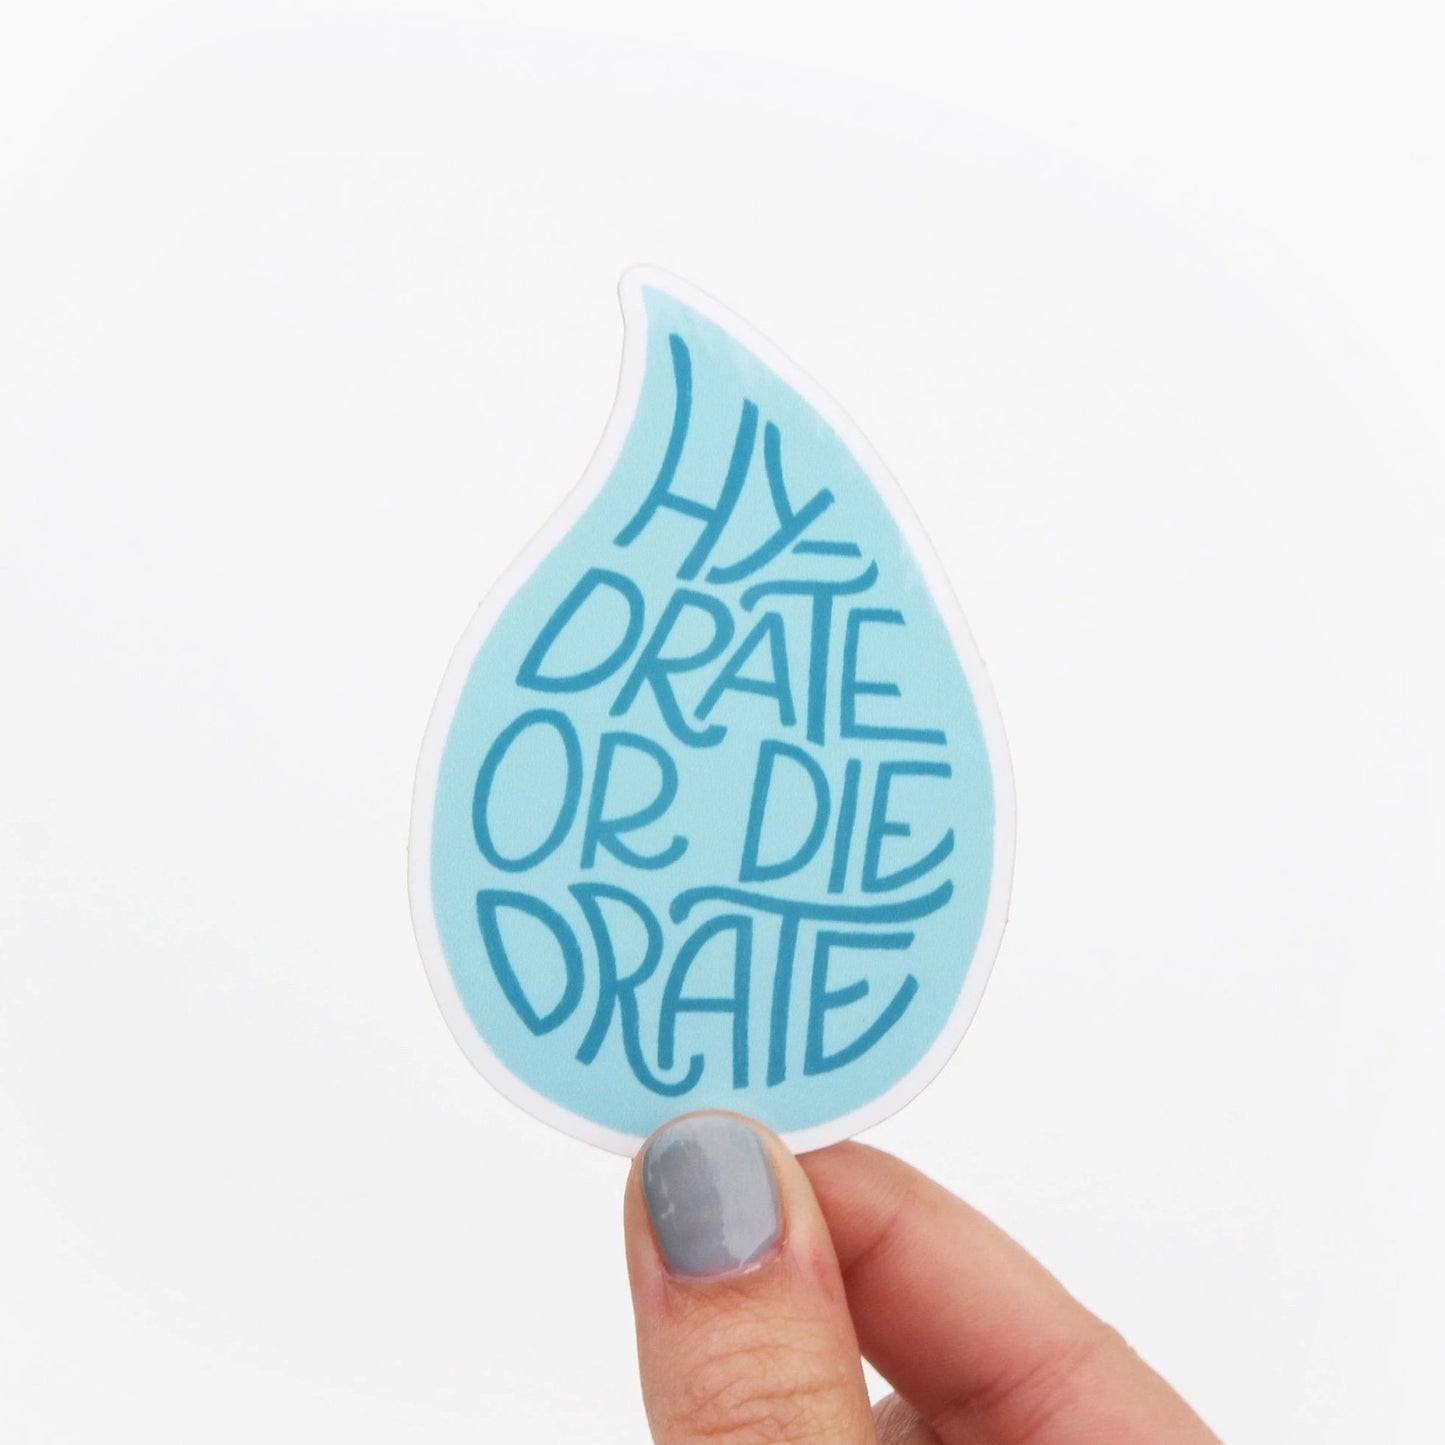 Hydrate or Die-Drate Sticker